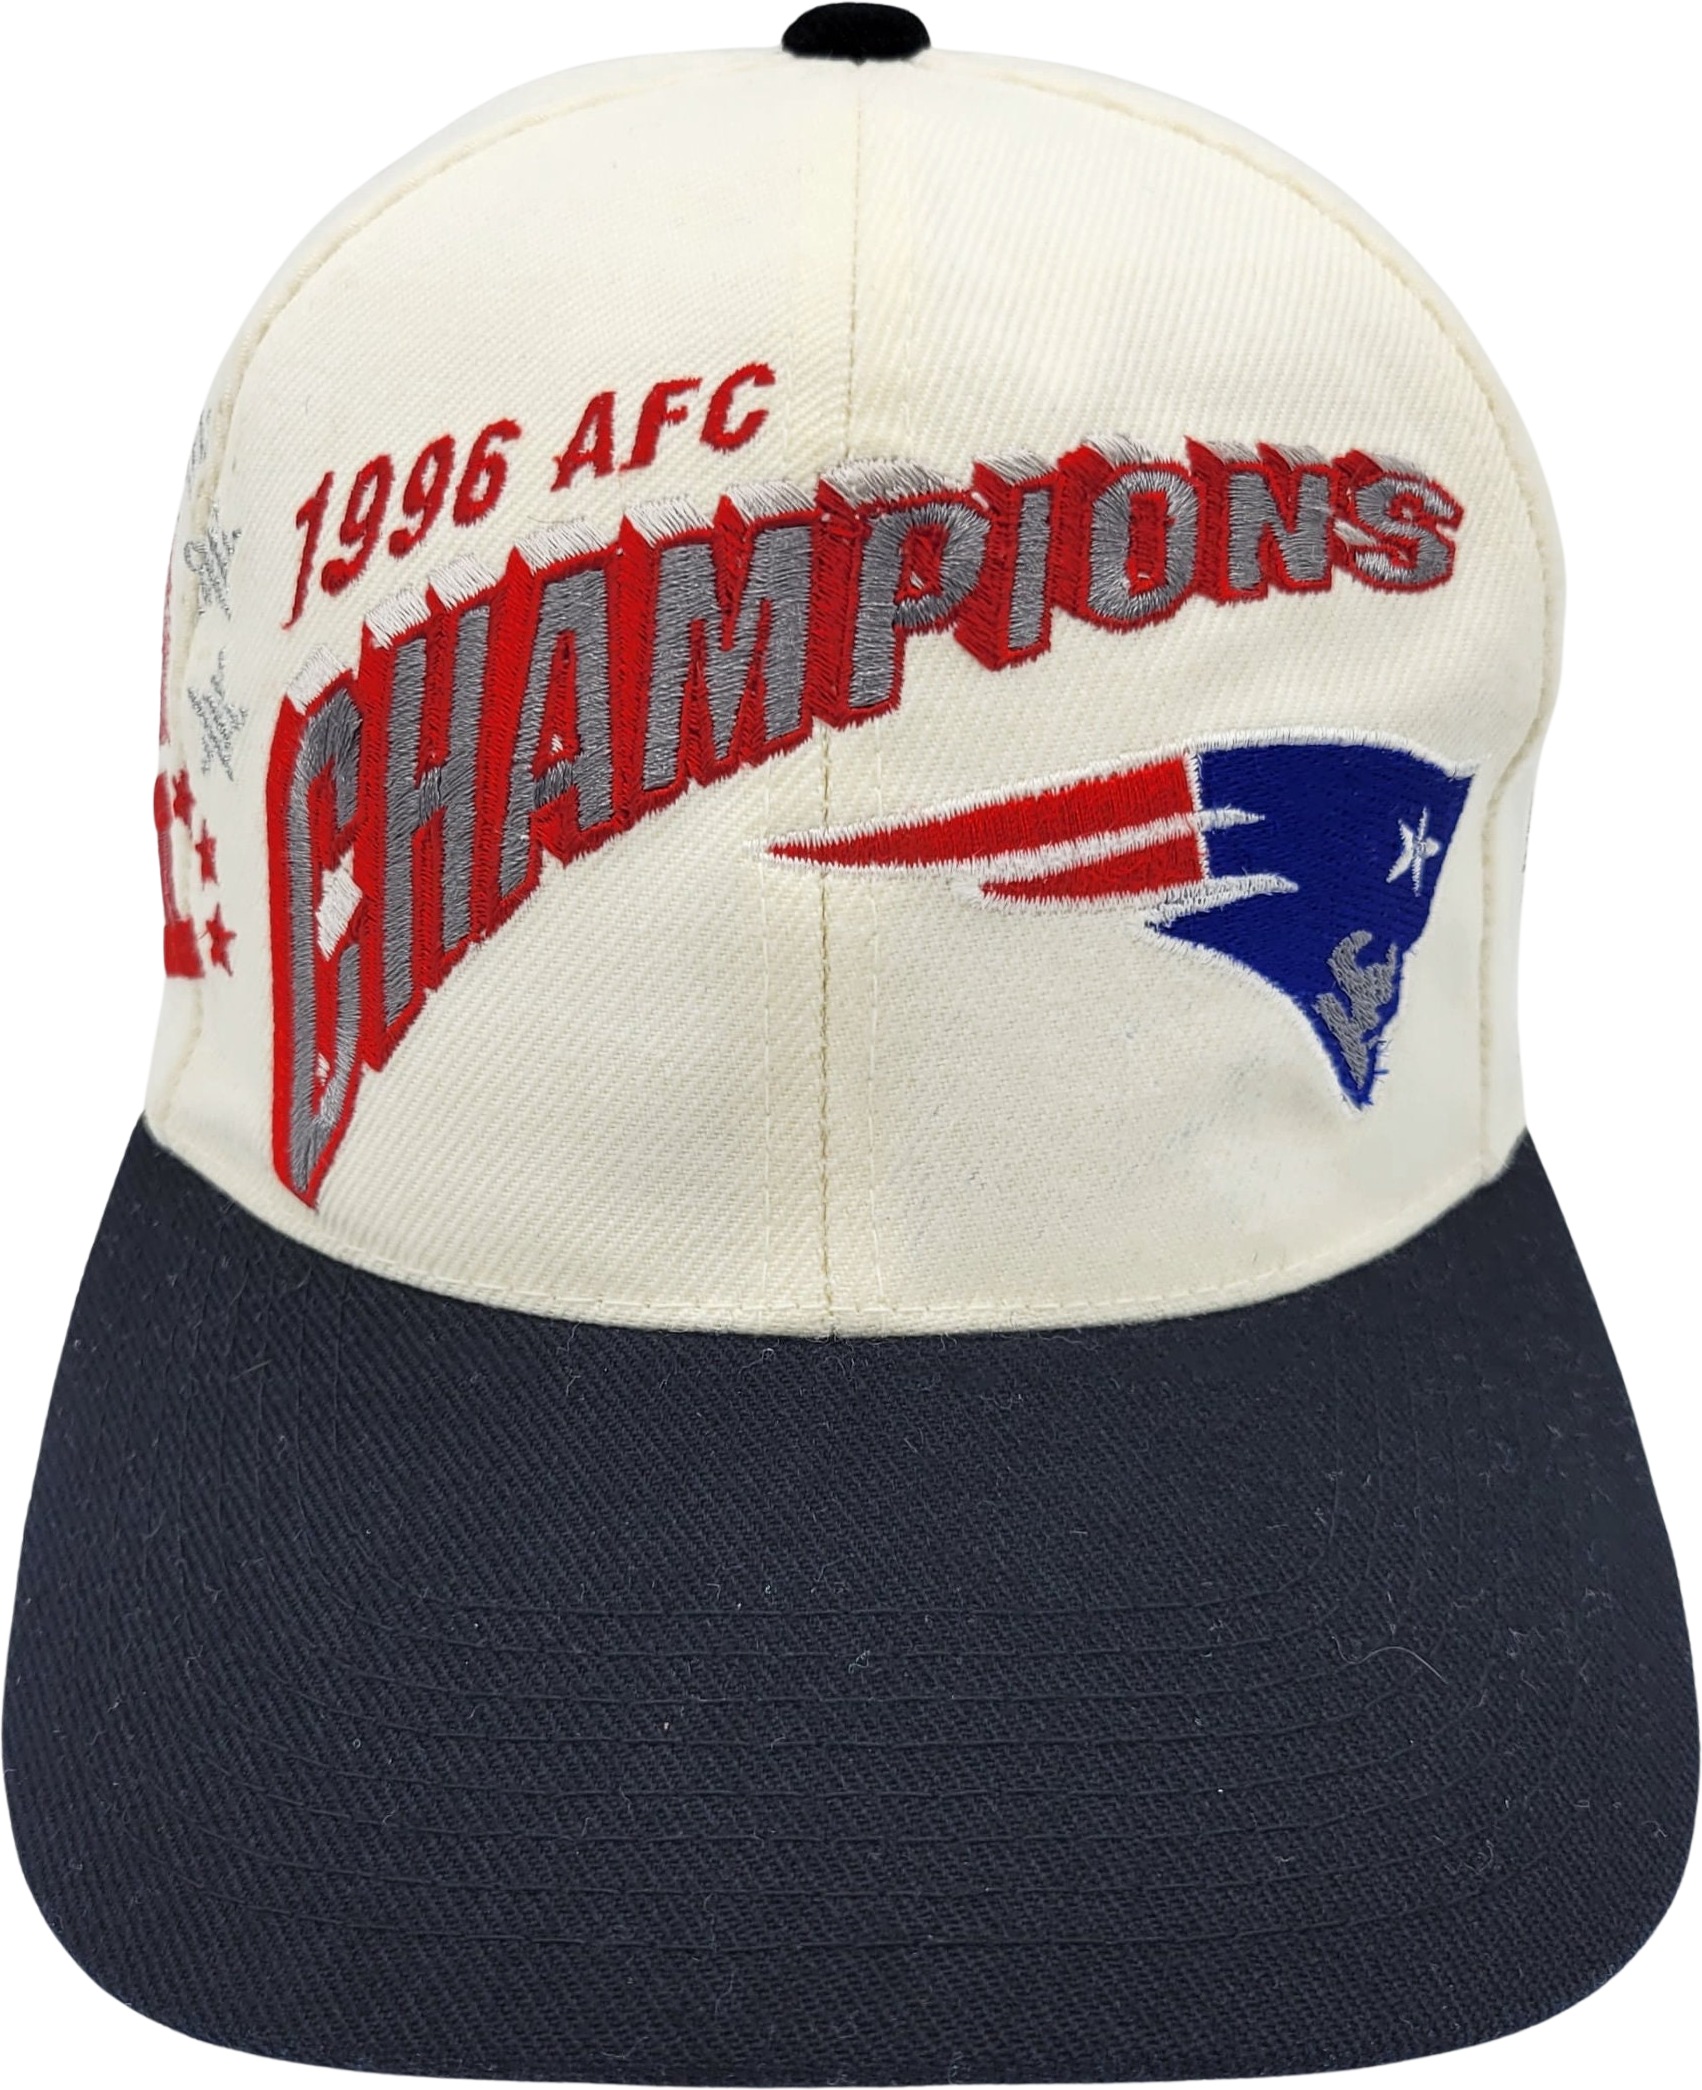 New England Patriots Vintage 90s Sports Specialties Snapback Hat